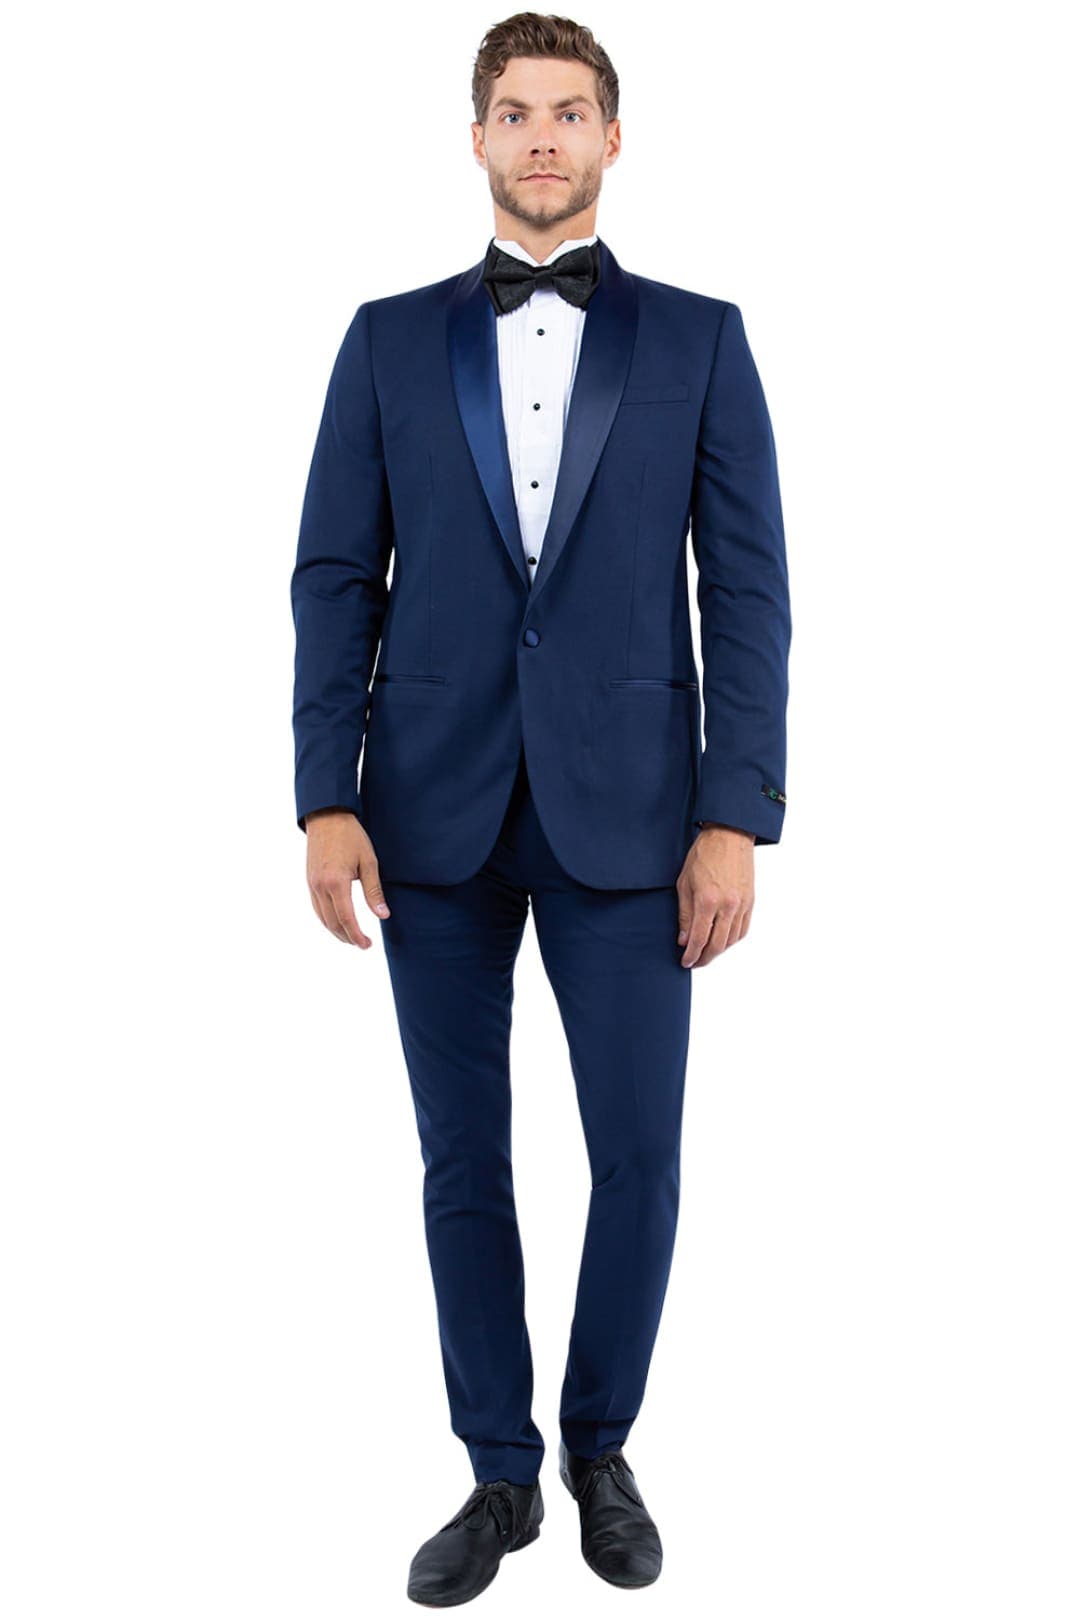 Navy Zegarie Shawl Collar Tuxedo Jacket For Men MJT366-02 - Navy / 34R / MJT366-02 - Tuxedo-separates